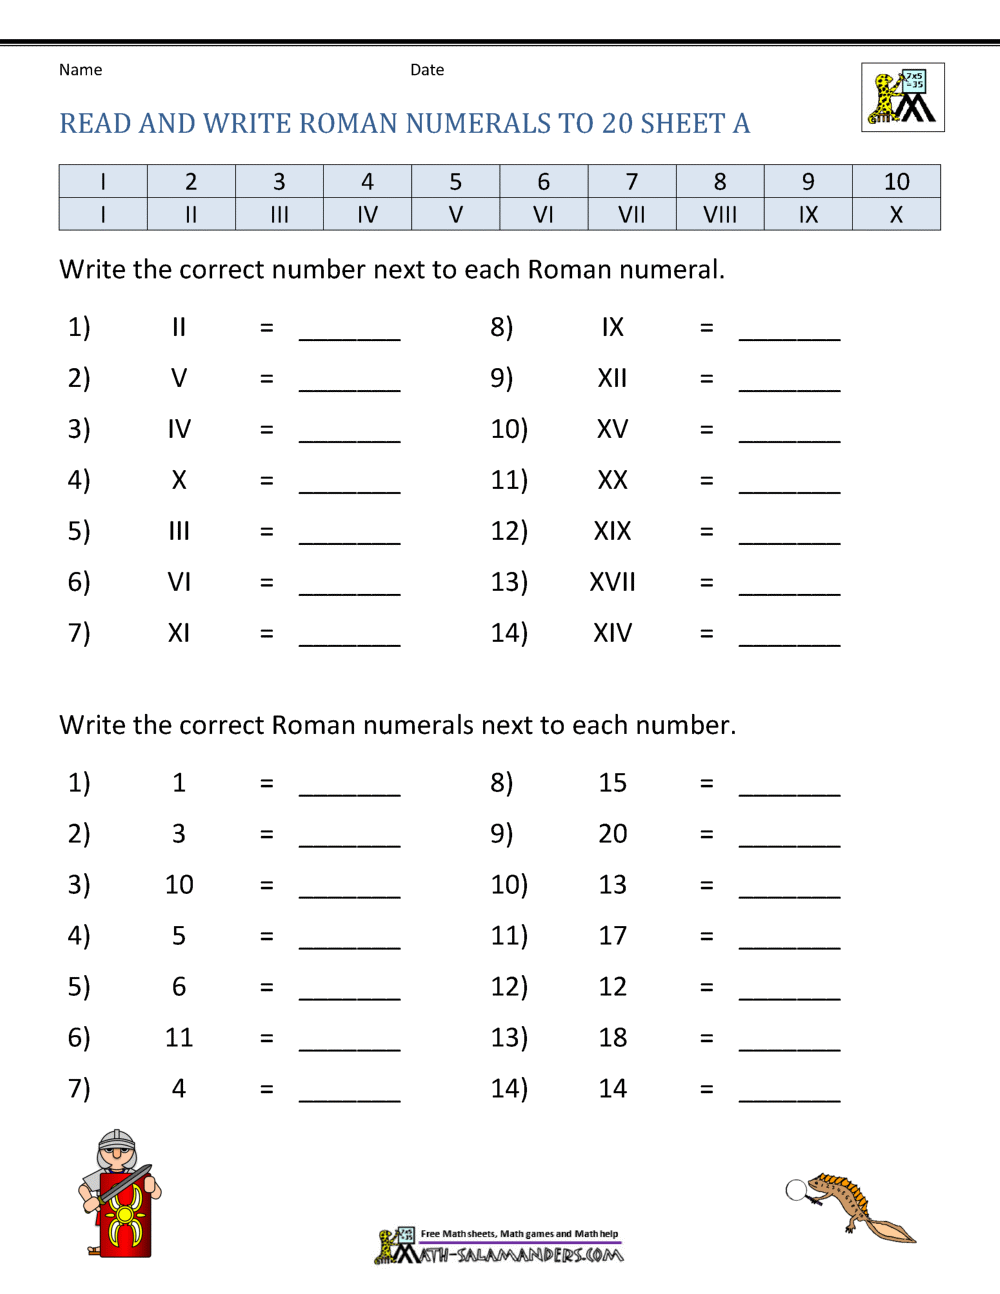 https-www-dadsworksheets-roman-numerals-grid-1-100-worksheet